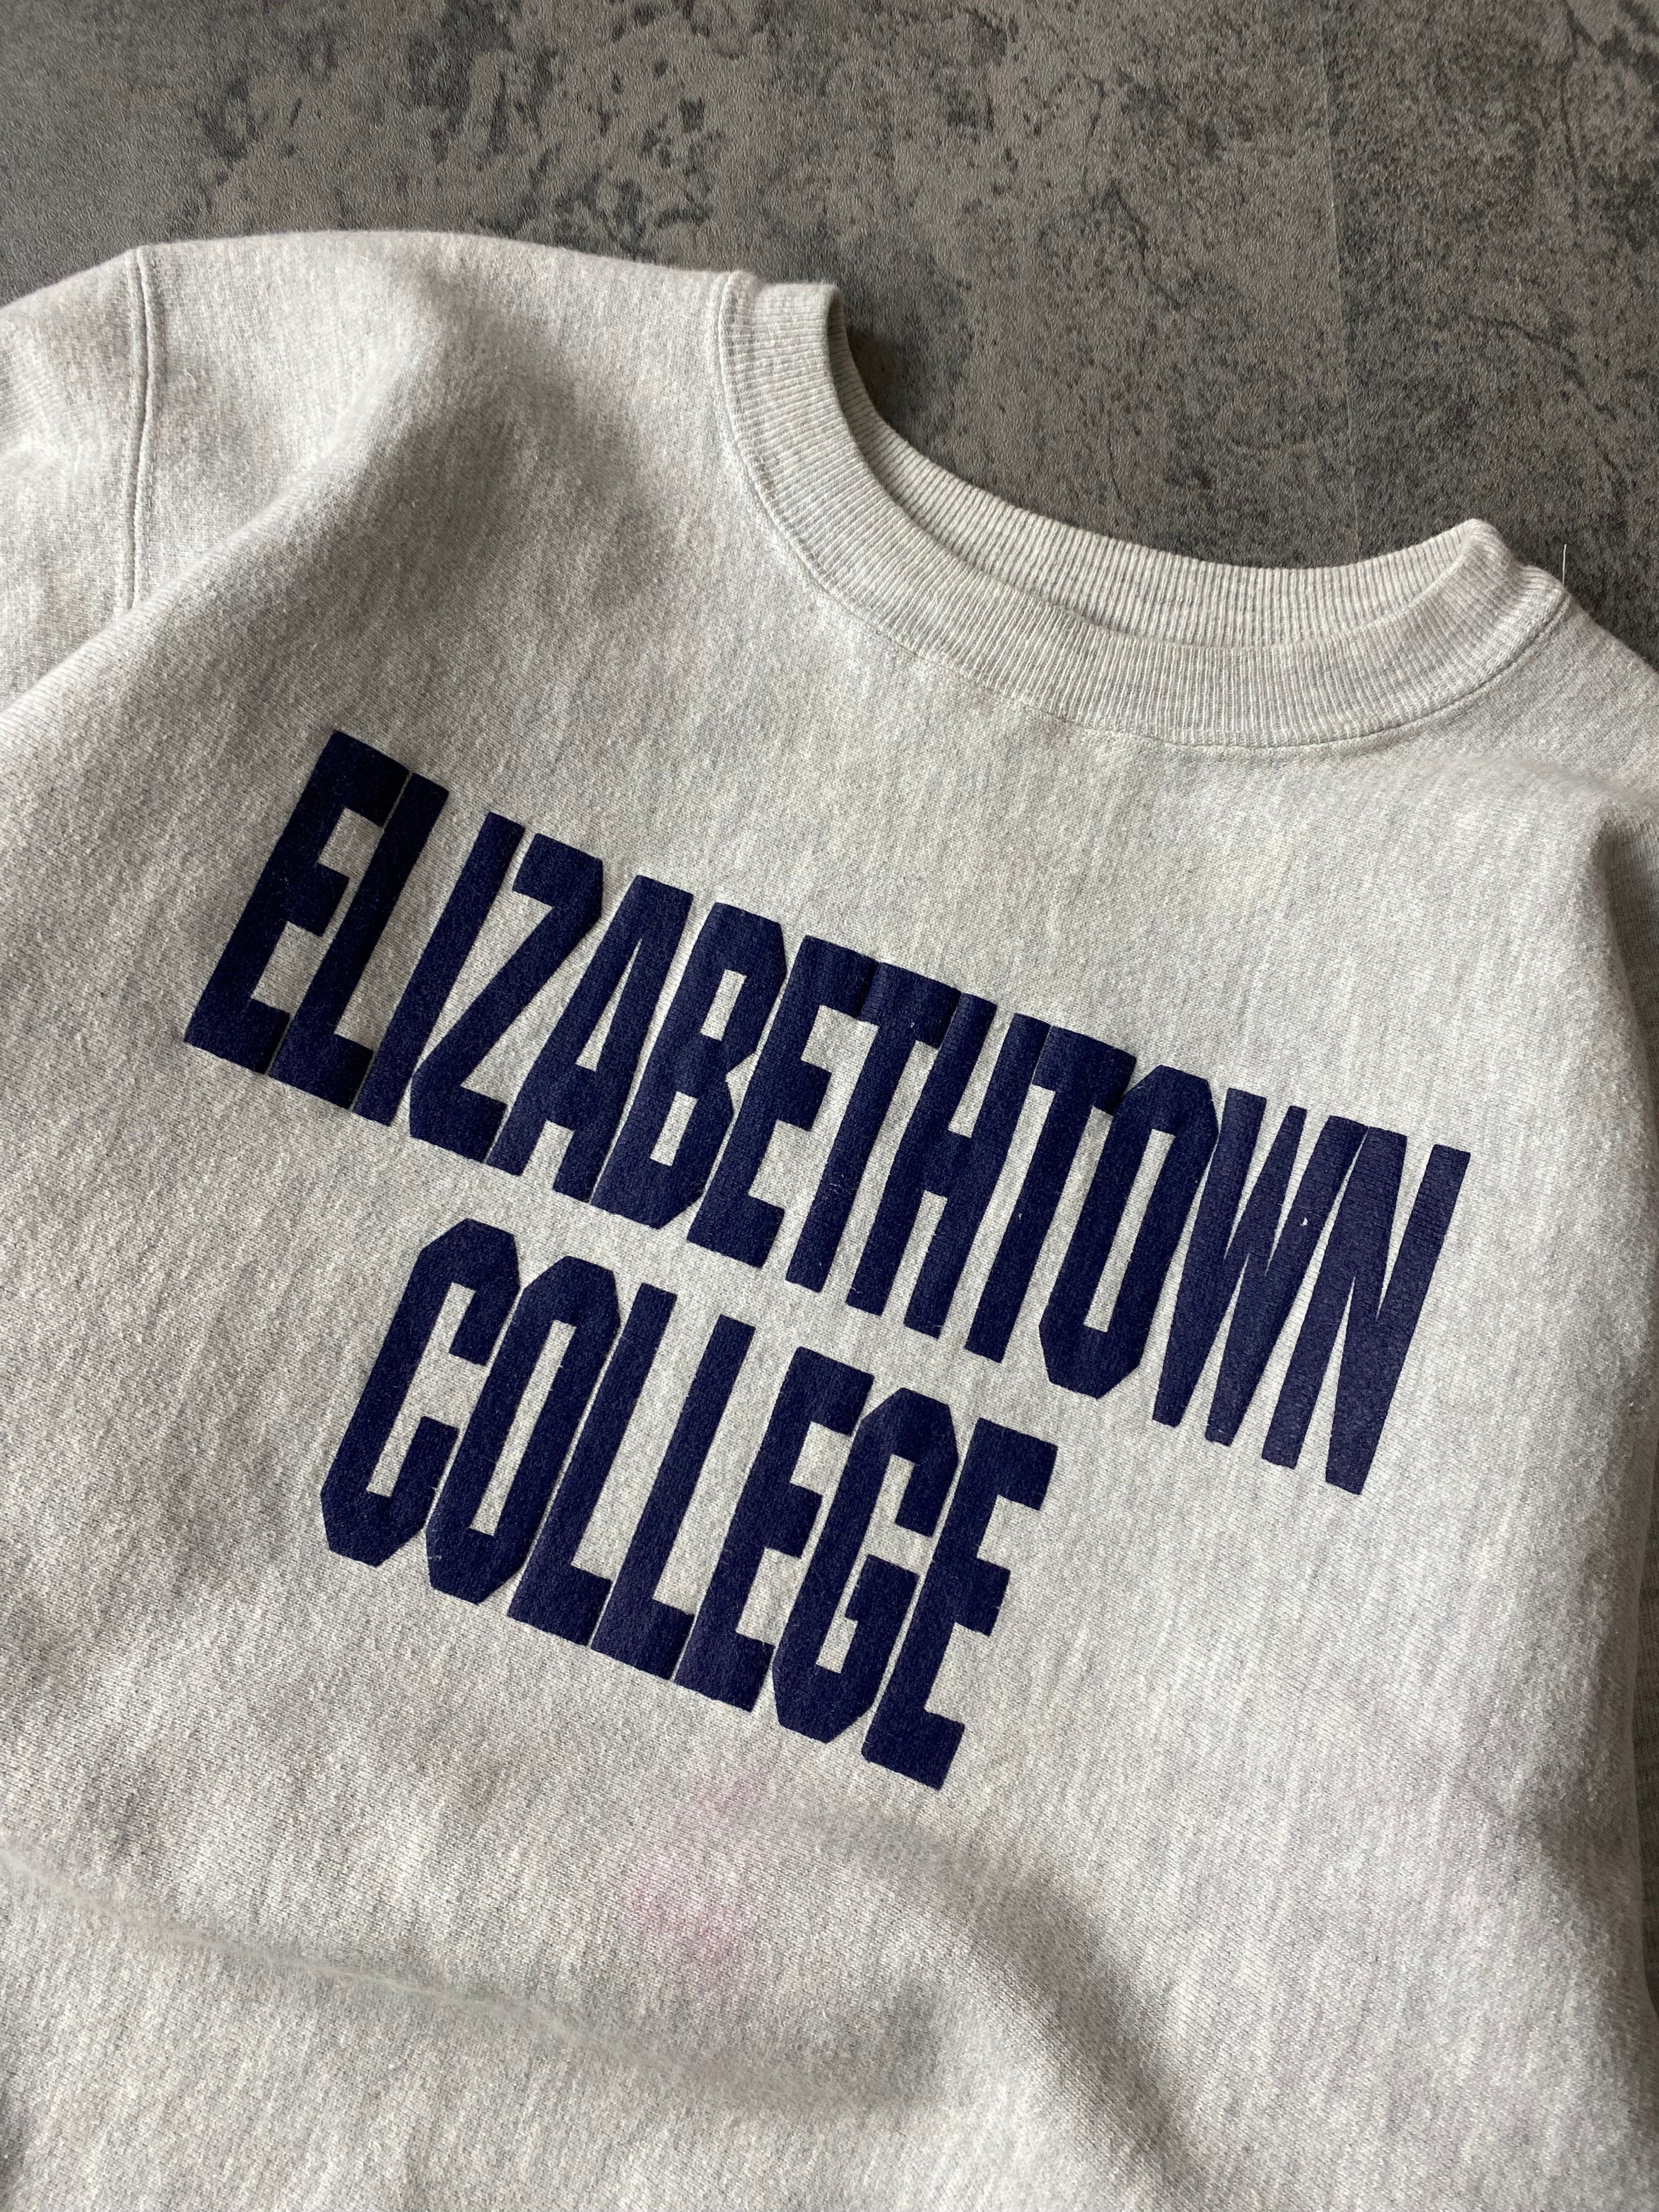 Vintage Elizabethtown College Sweatshirt Mens Large Grey Champion